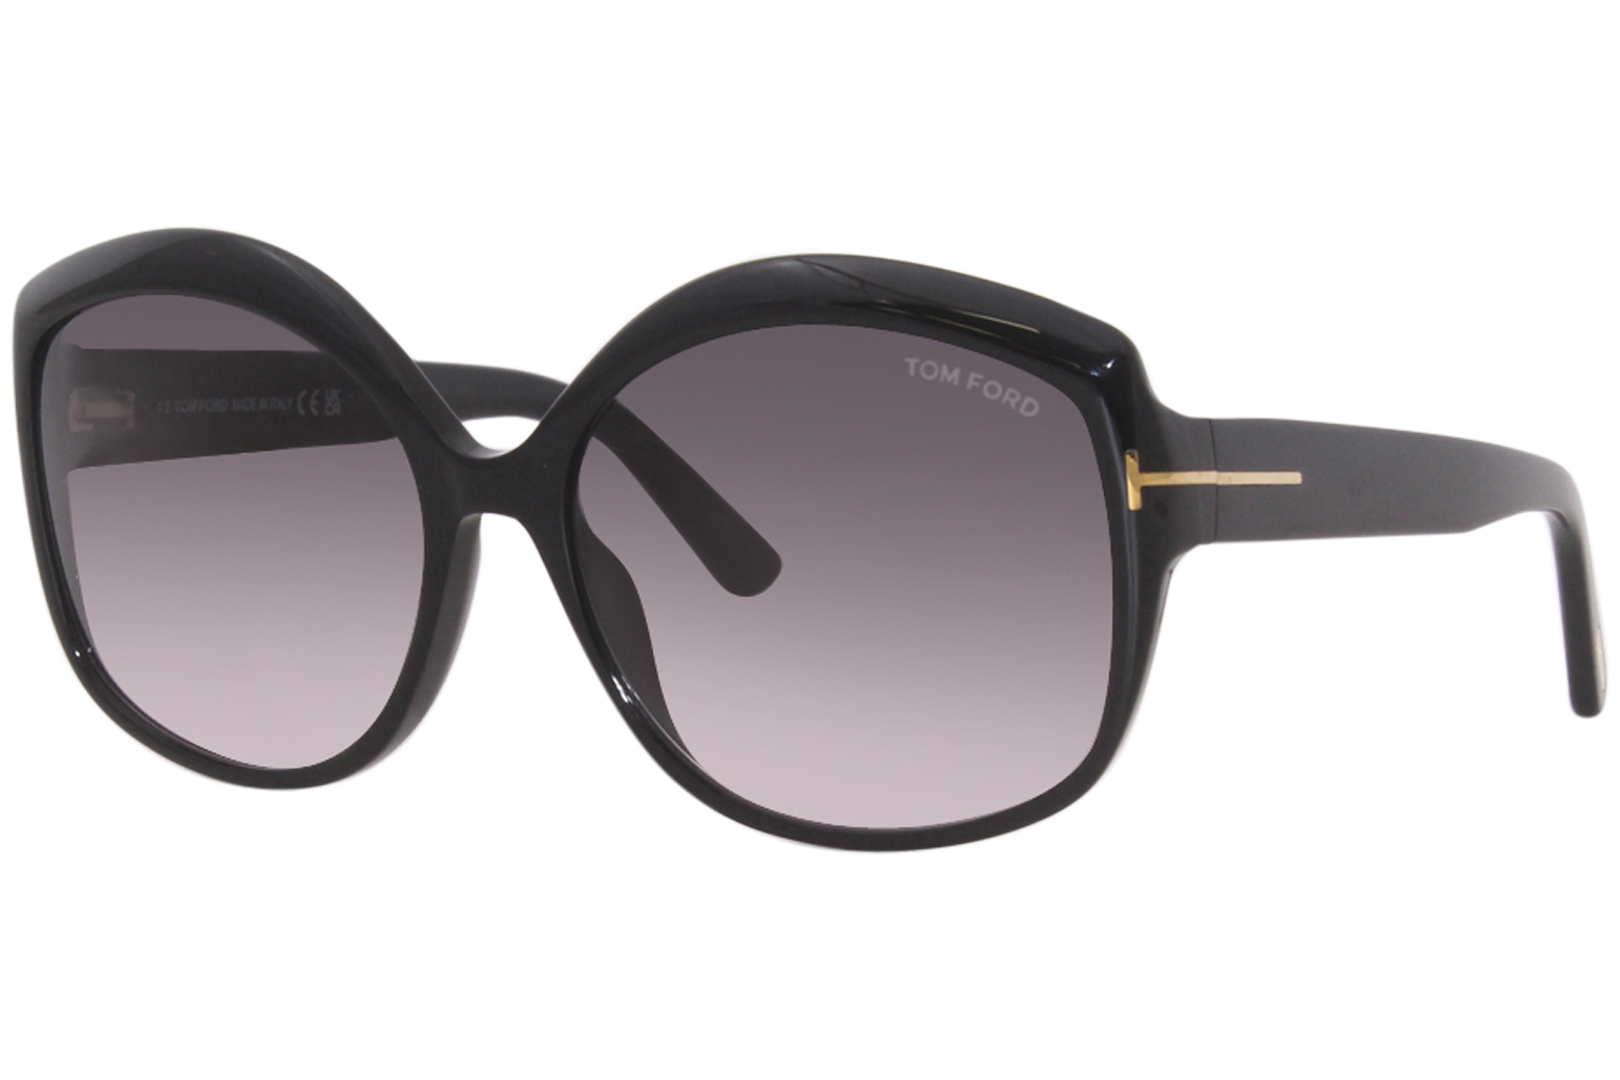 Tom Ford Chiara-02 TF919 01B Sunglasses Women's Black/Gradient Grey Pilot  60mm 